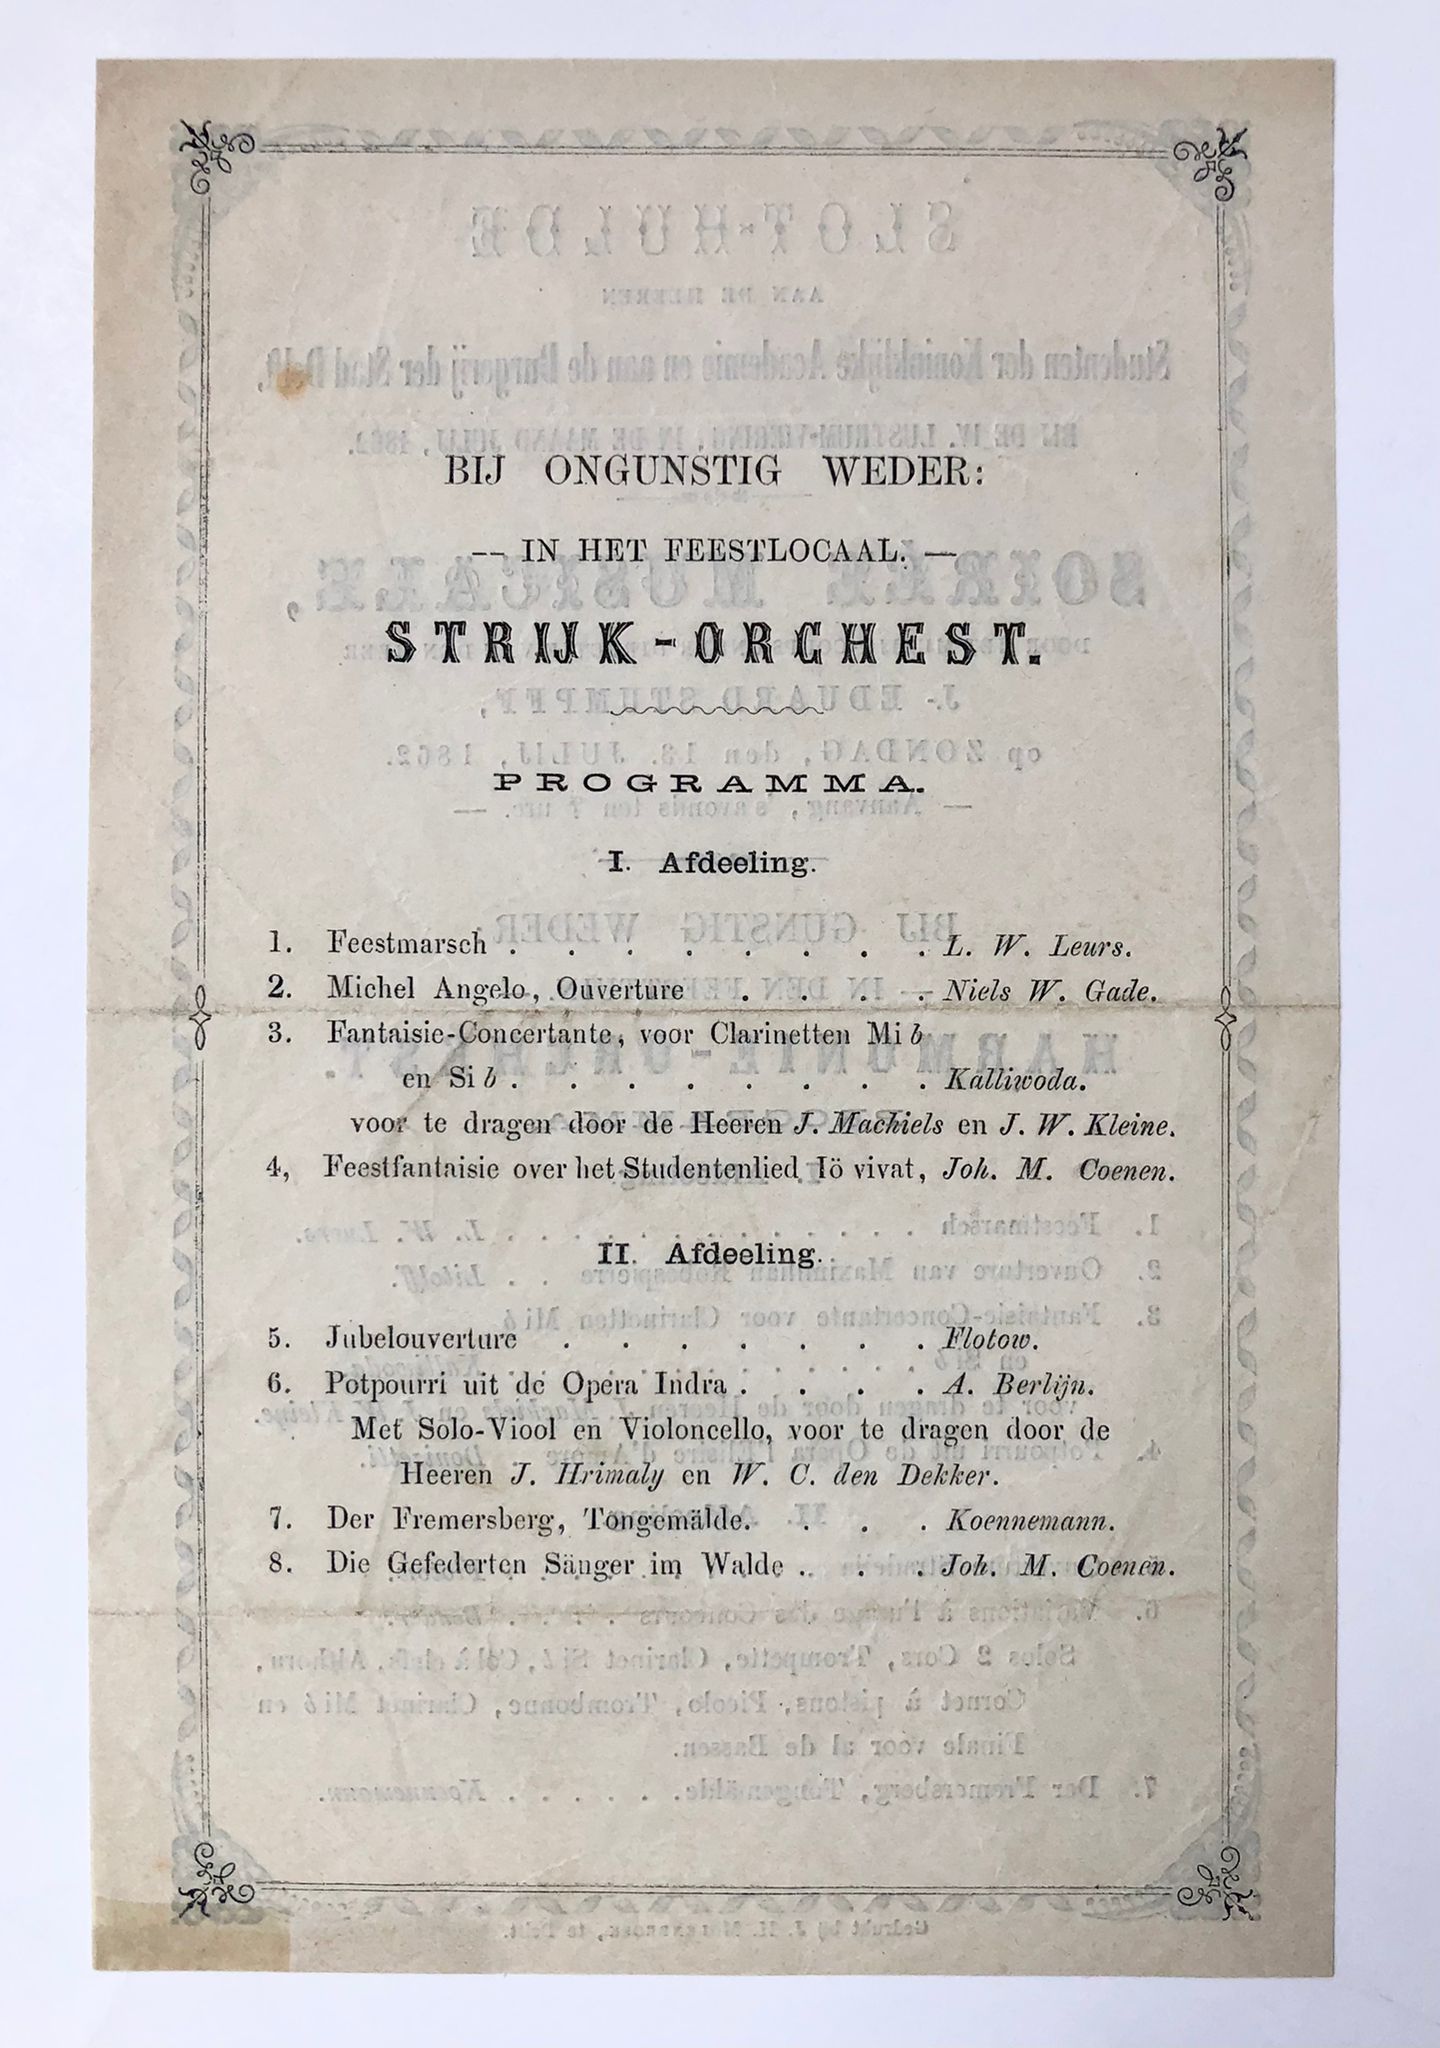 [Printed publications, Music, Delft, Student Koninklijke Academie, 1862] Programm soiree musicale, Delft 13-7-1862 for the lustrum studenten Kon. Academie. Printed, 2 pp.